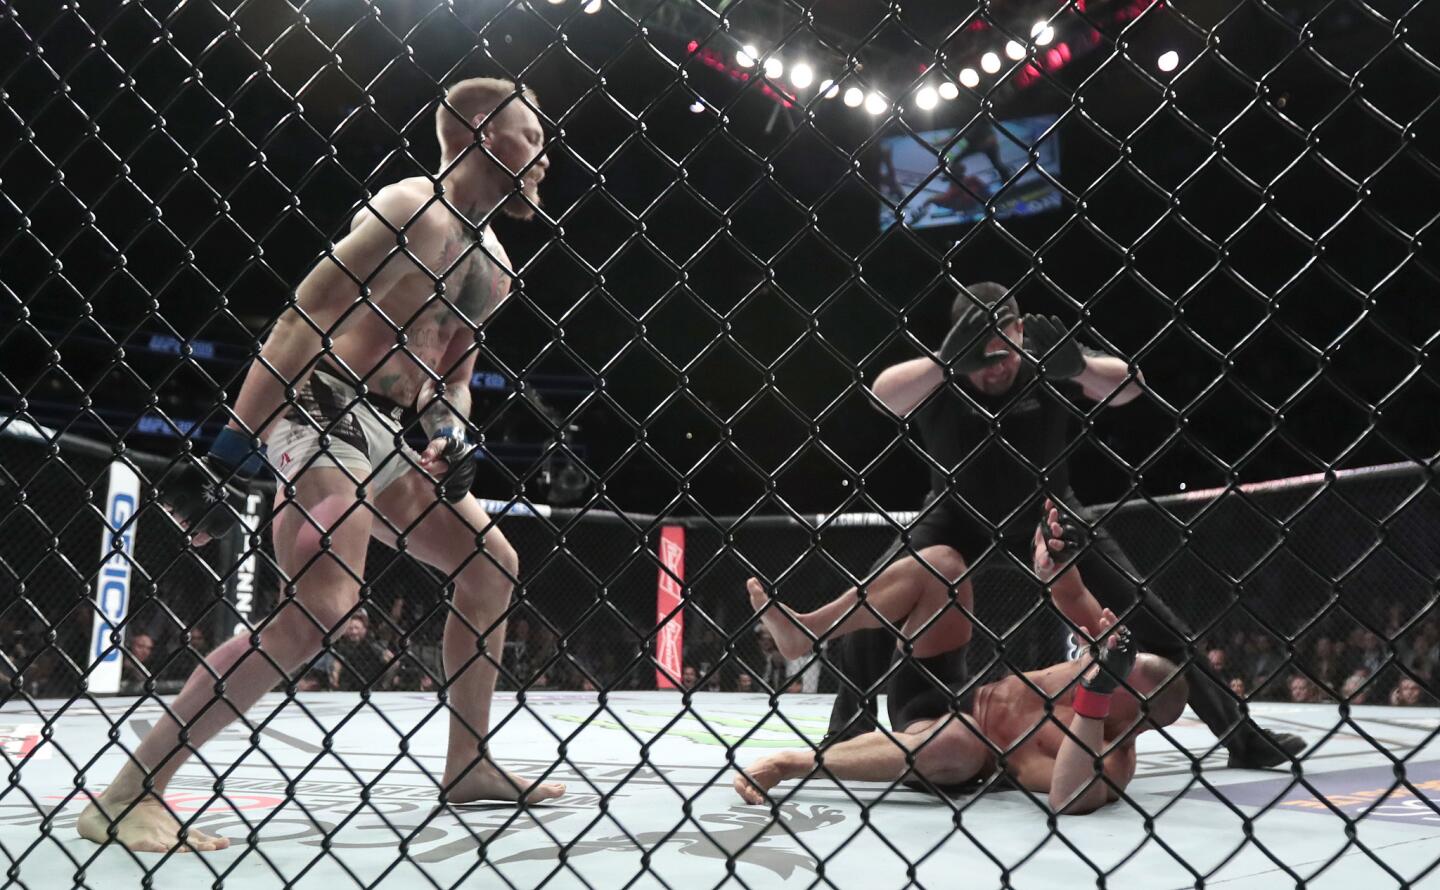 UFC 205: McGregor vs Alvarez